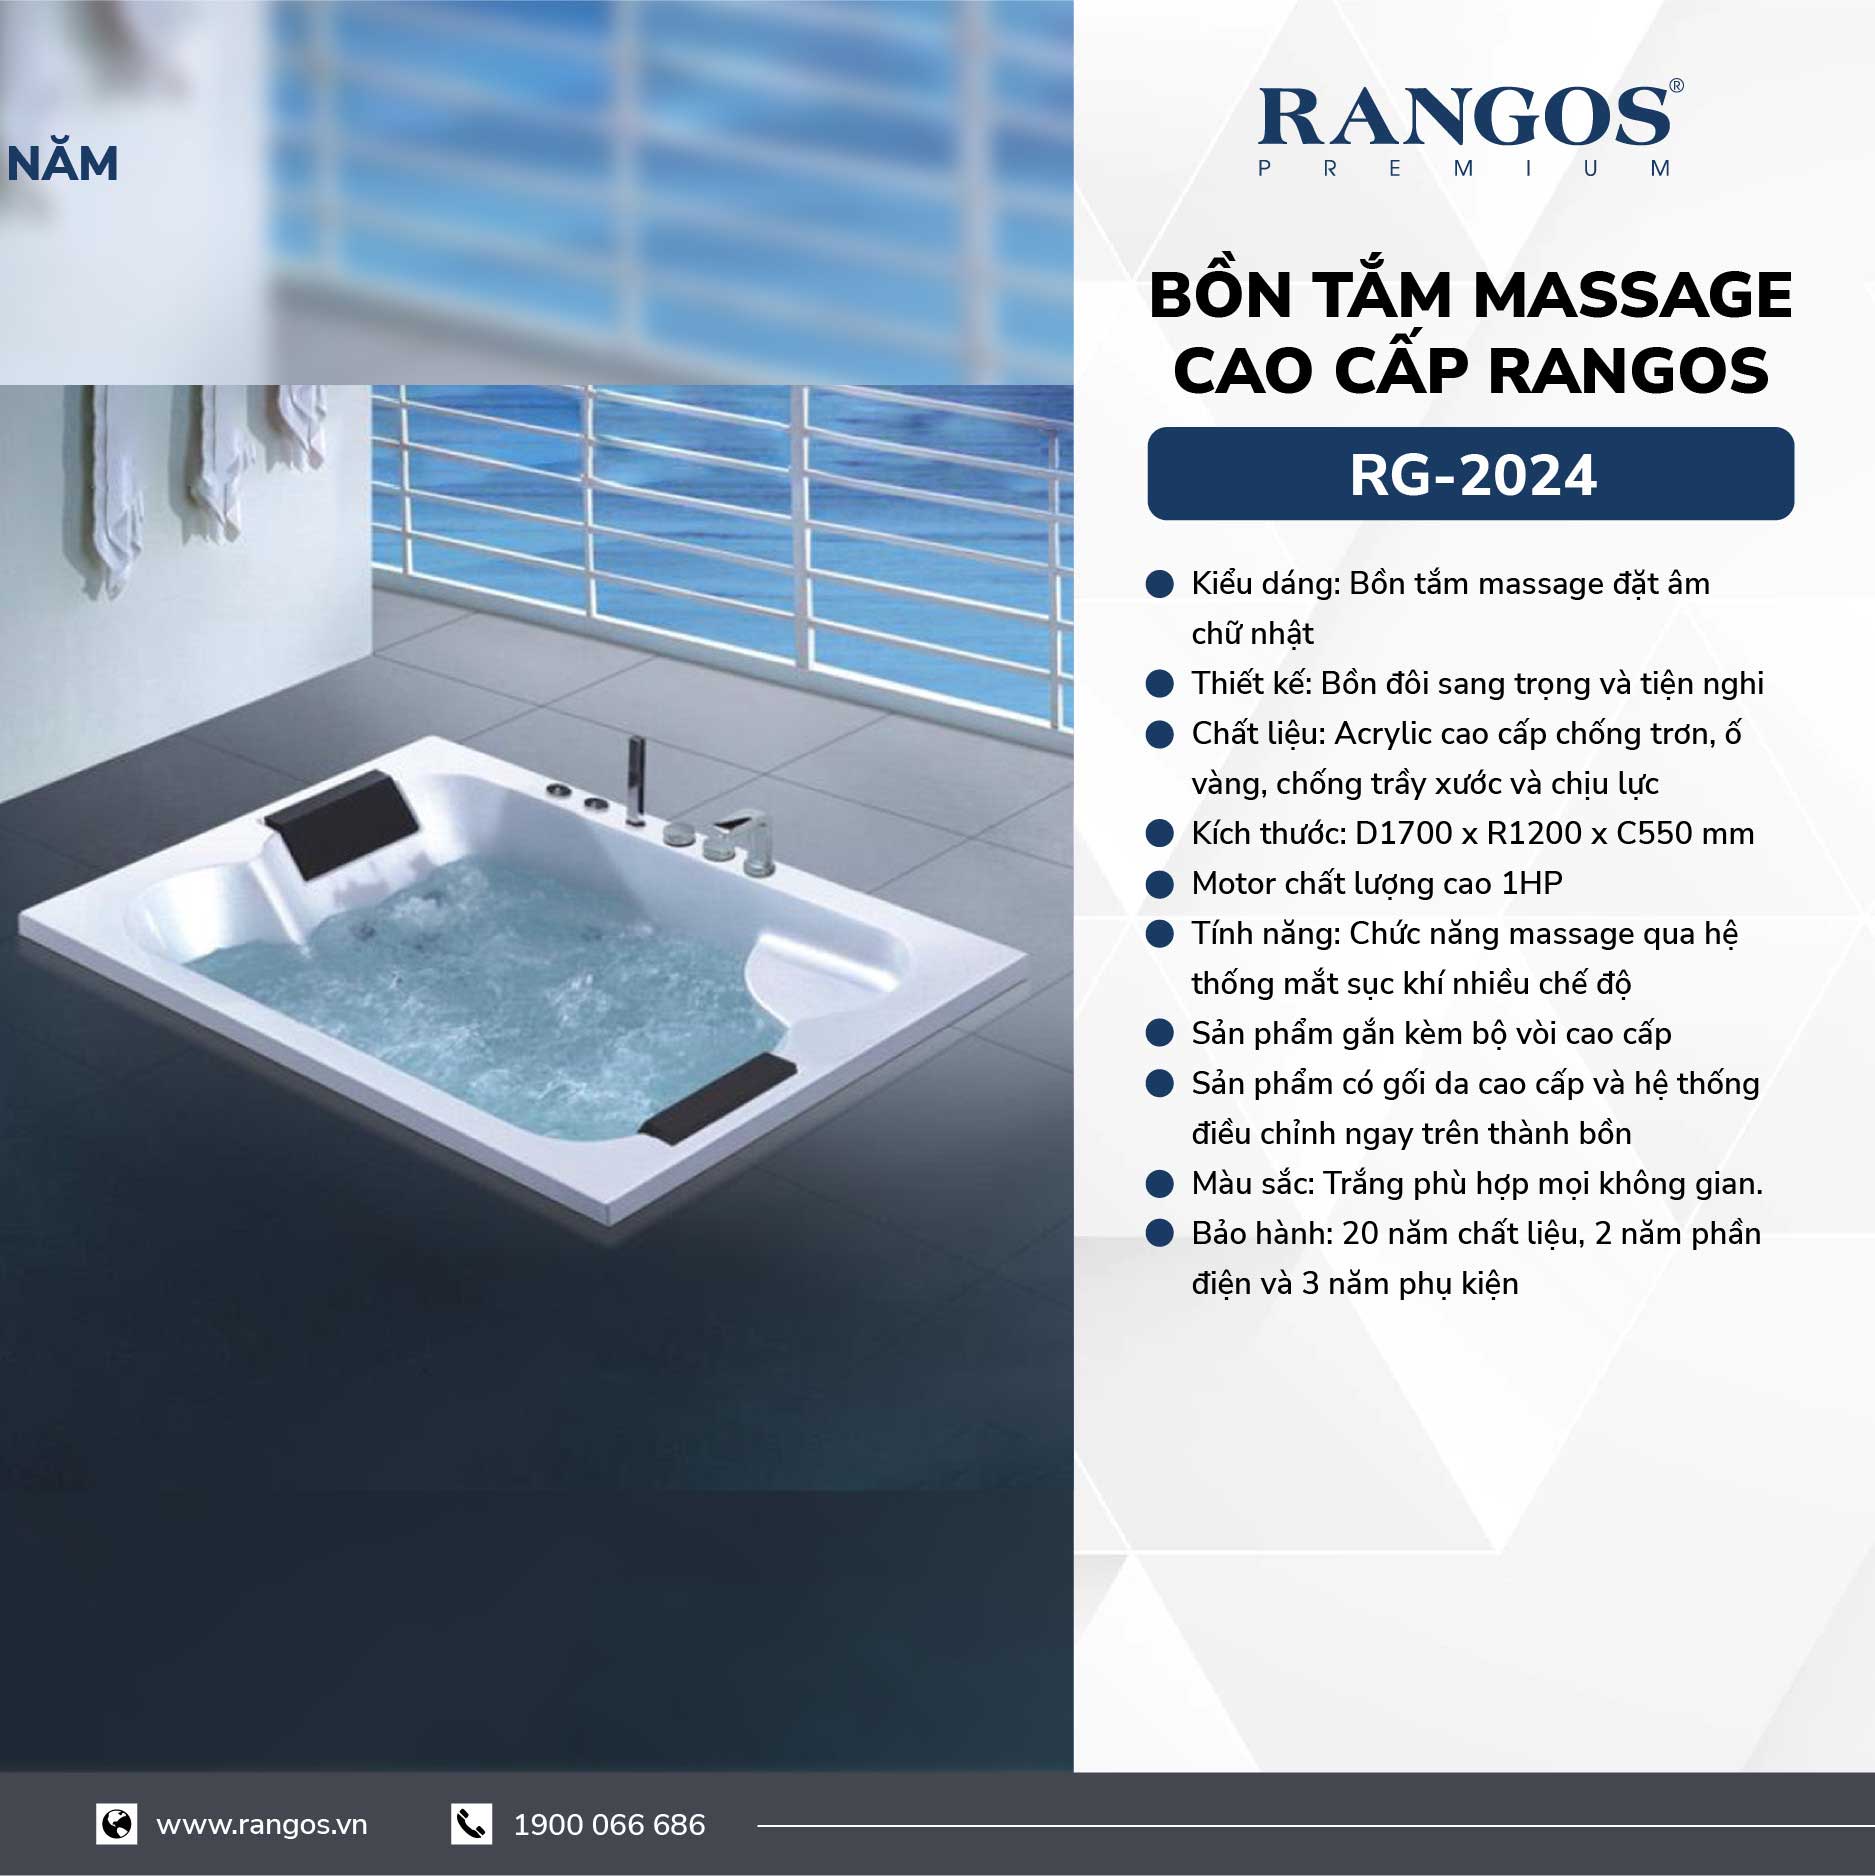 Bồn tắm massage cao cấp Rangos RG-2024